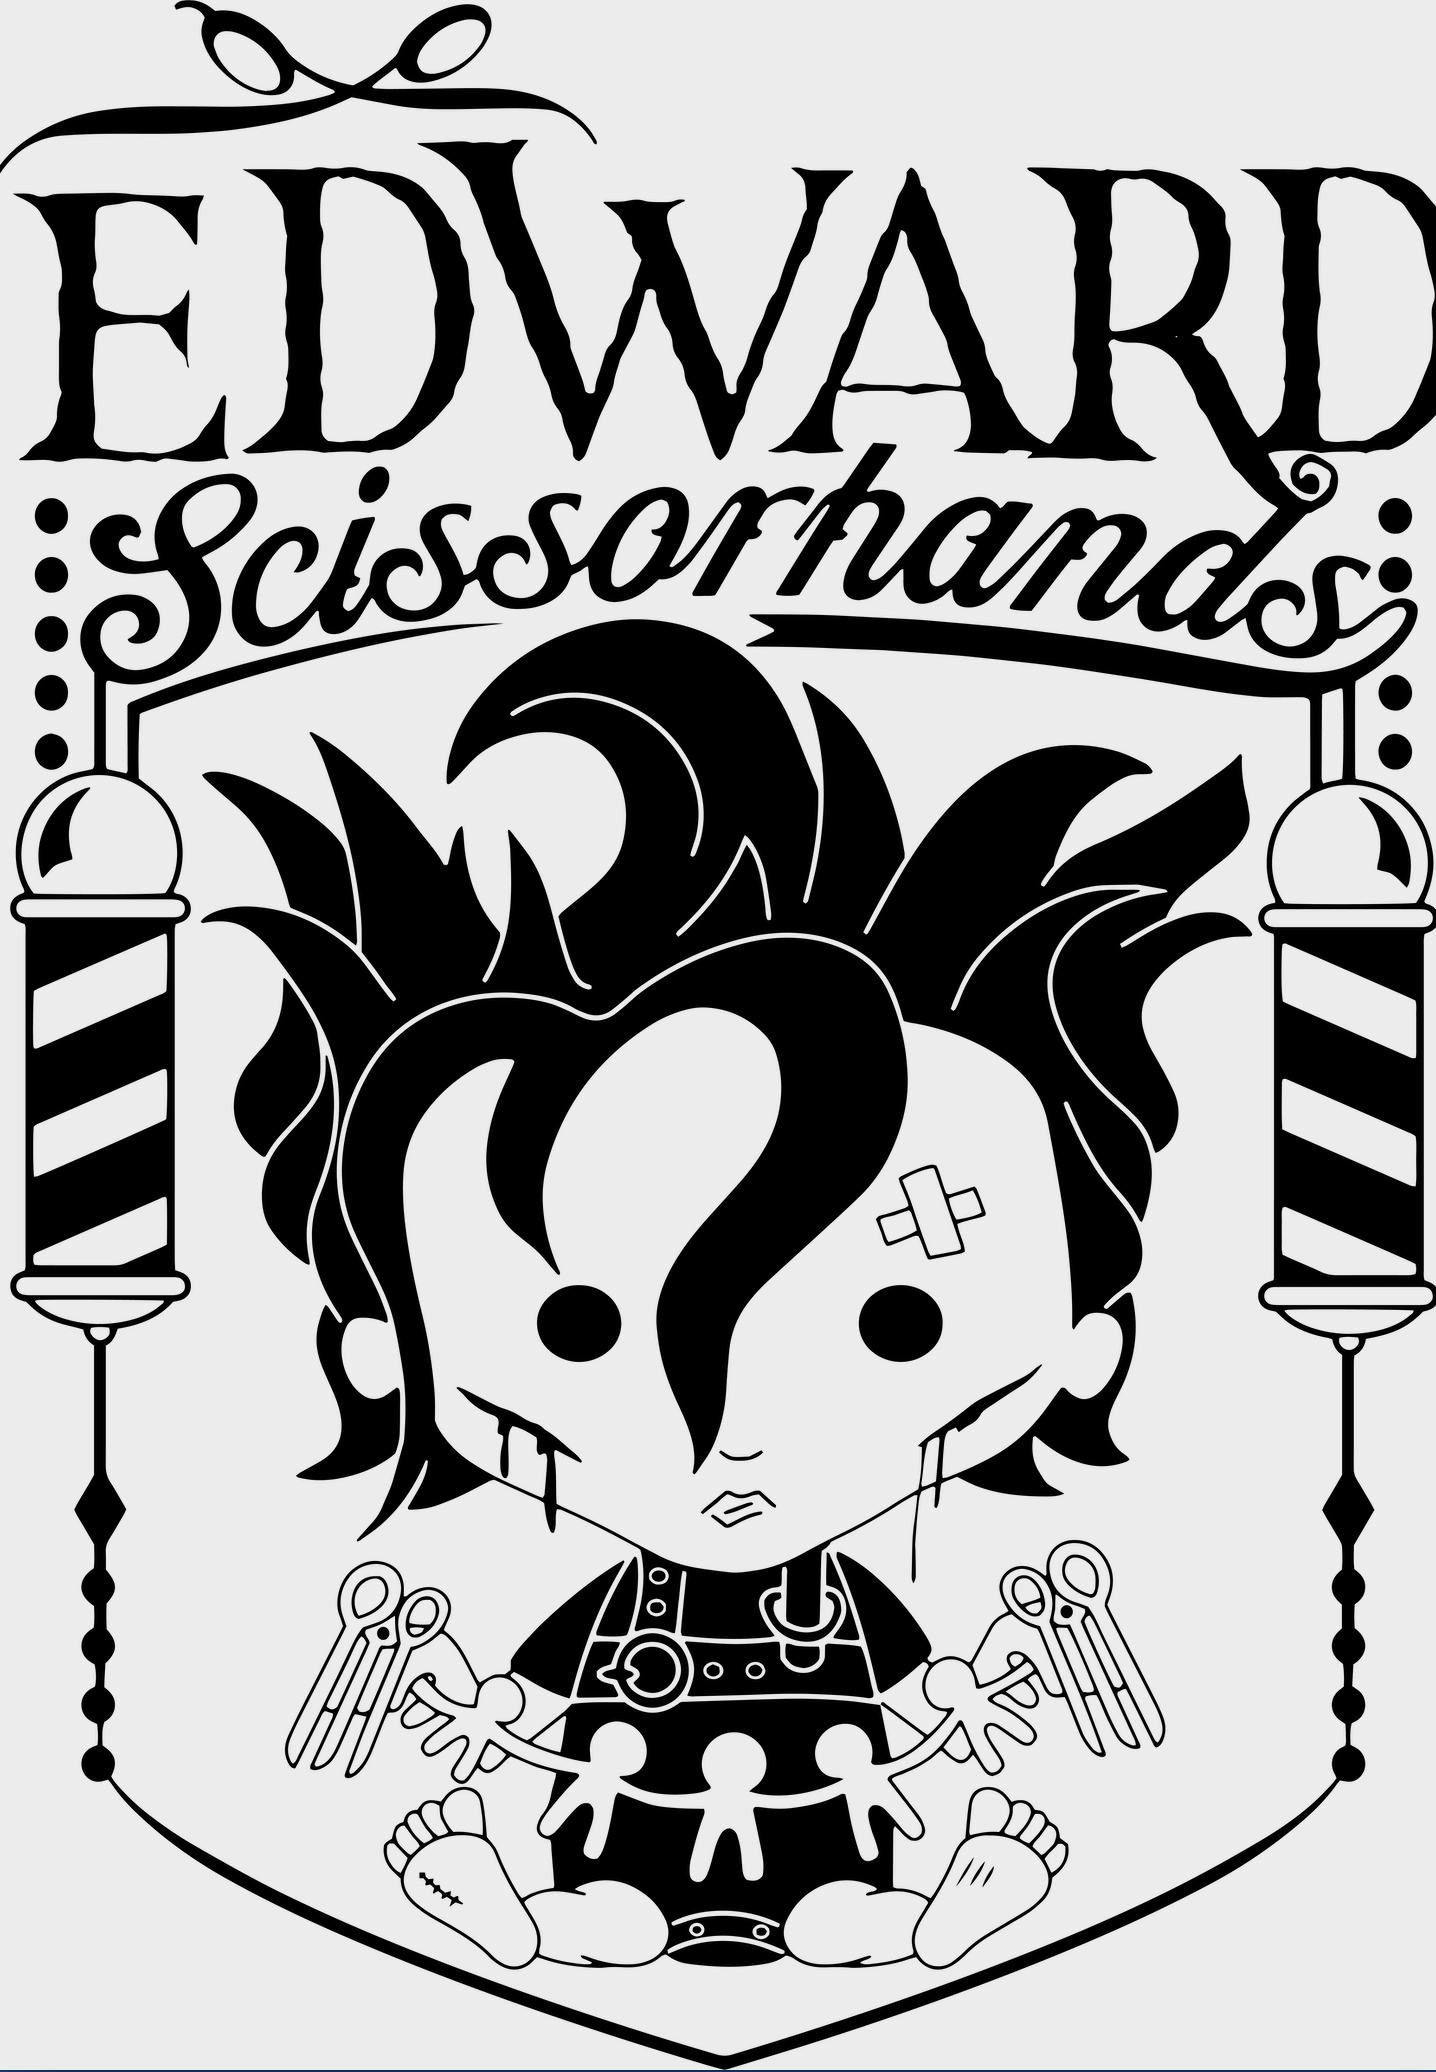 EDWARD SCISSOR HANDS